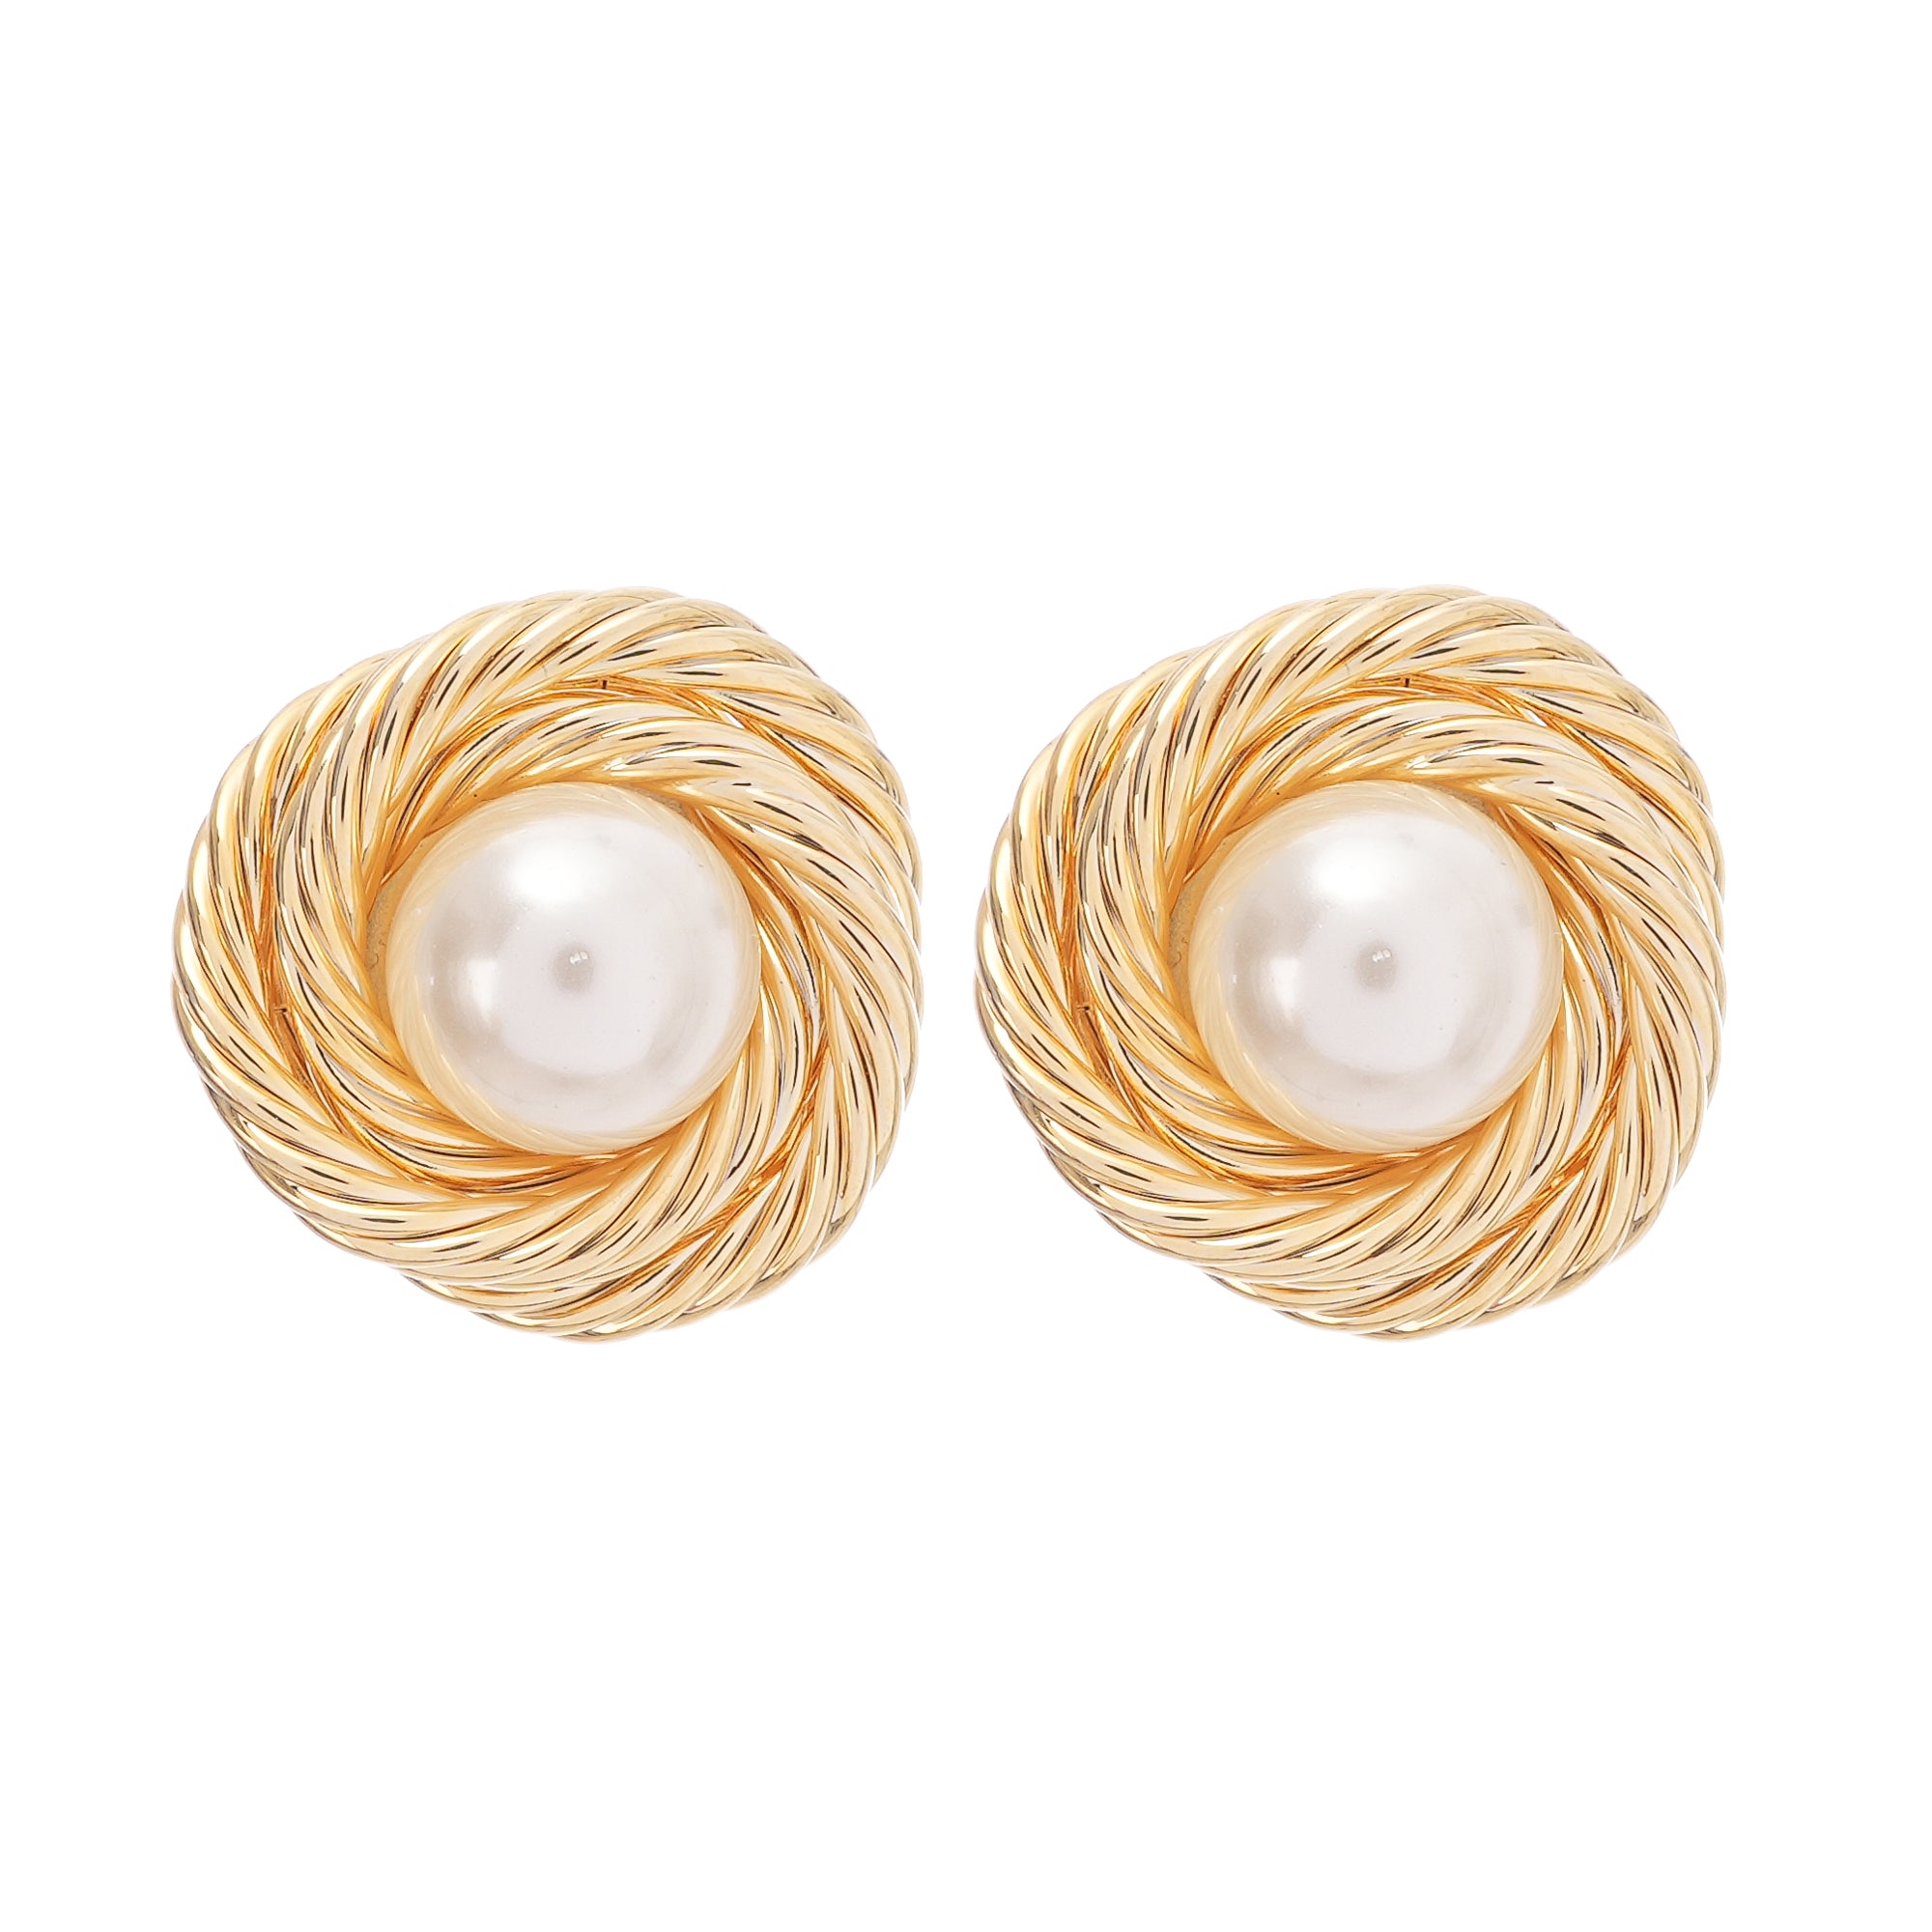 Chloe faux-pearl gold-plated earrings